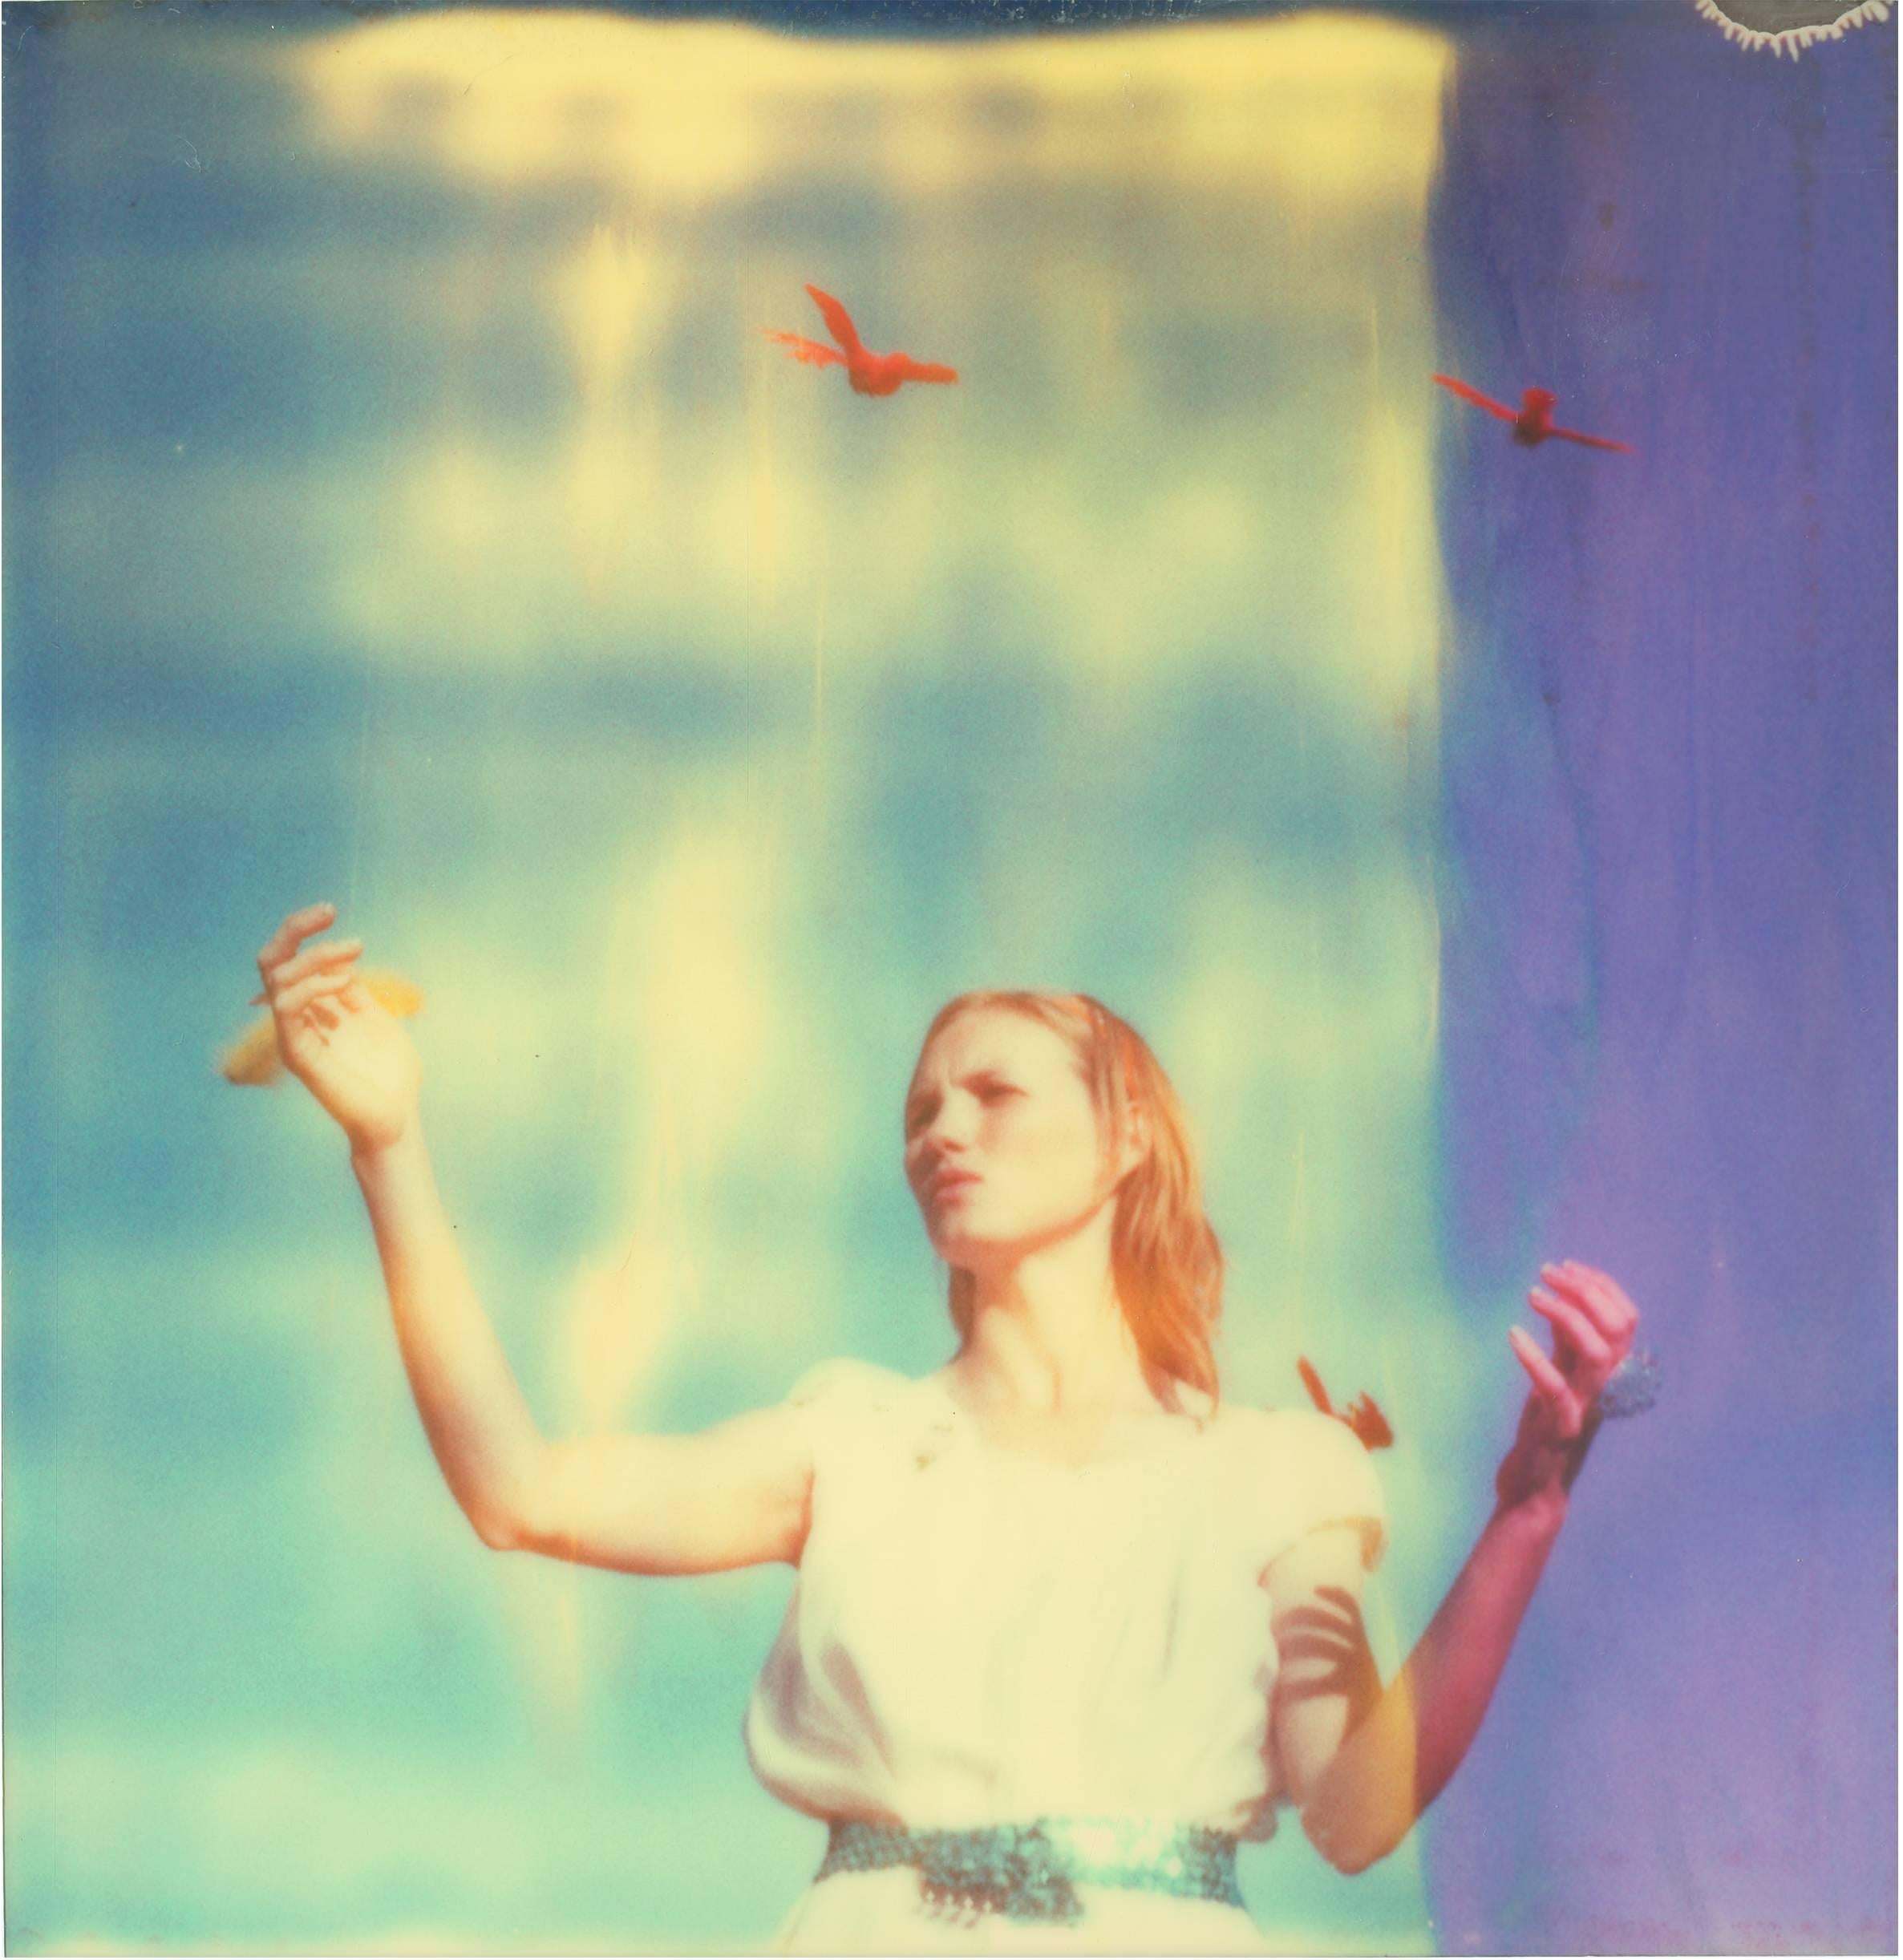 Stefanie Schneider Color Photograph - Haley and the Birds (29 Palms, CA) - based on a Polaroid Original